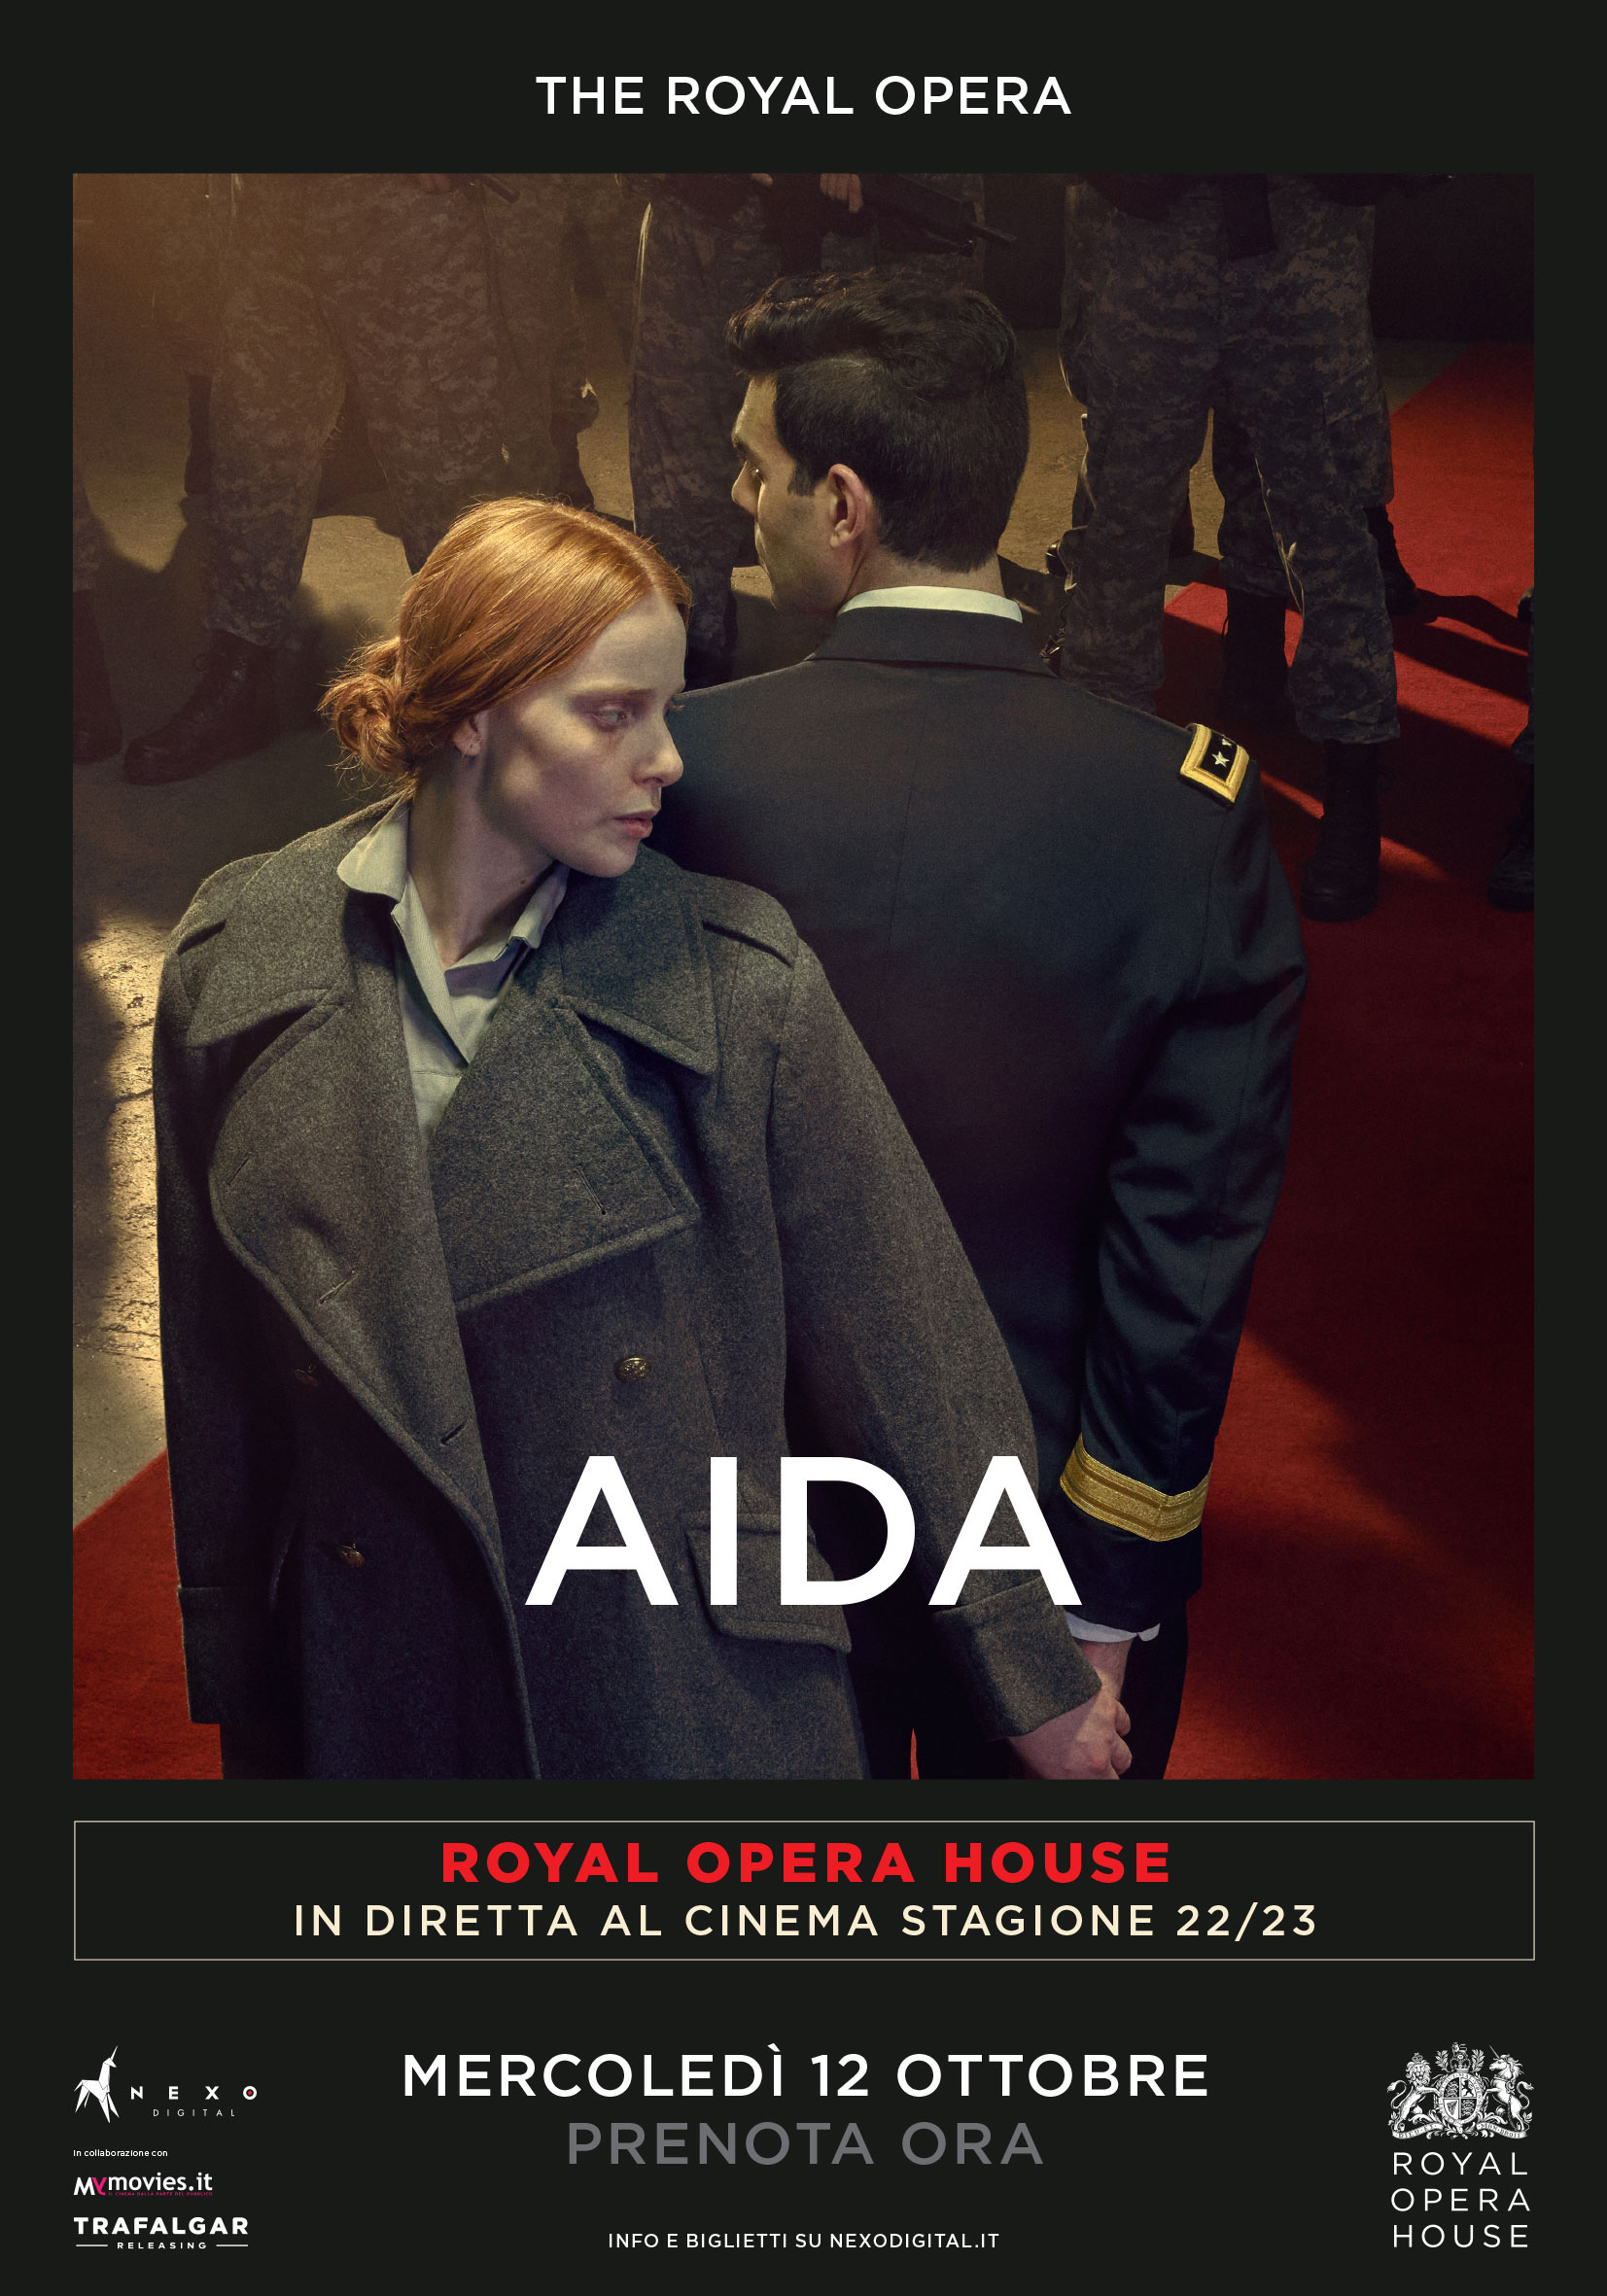 Aida di Robert Carsen in diretta al cinema dalla Royal Opera House 